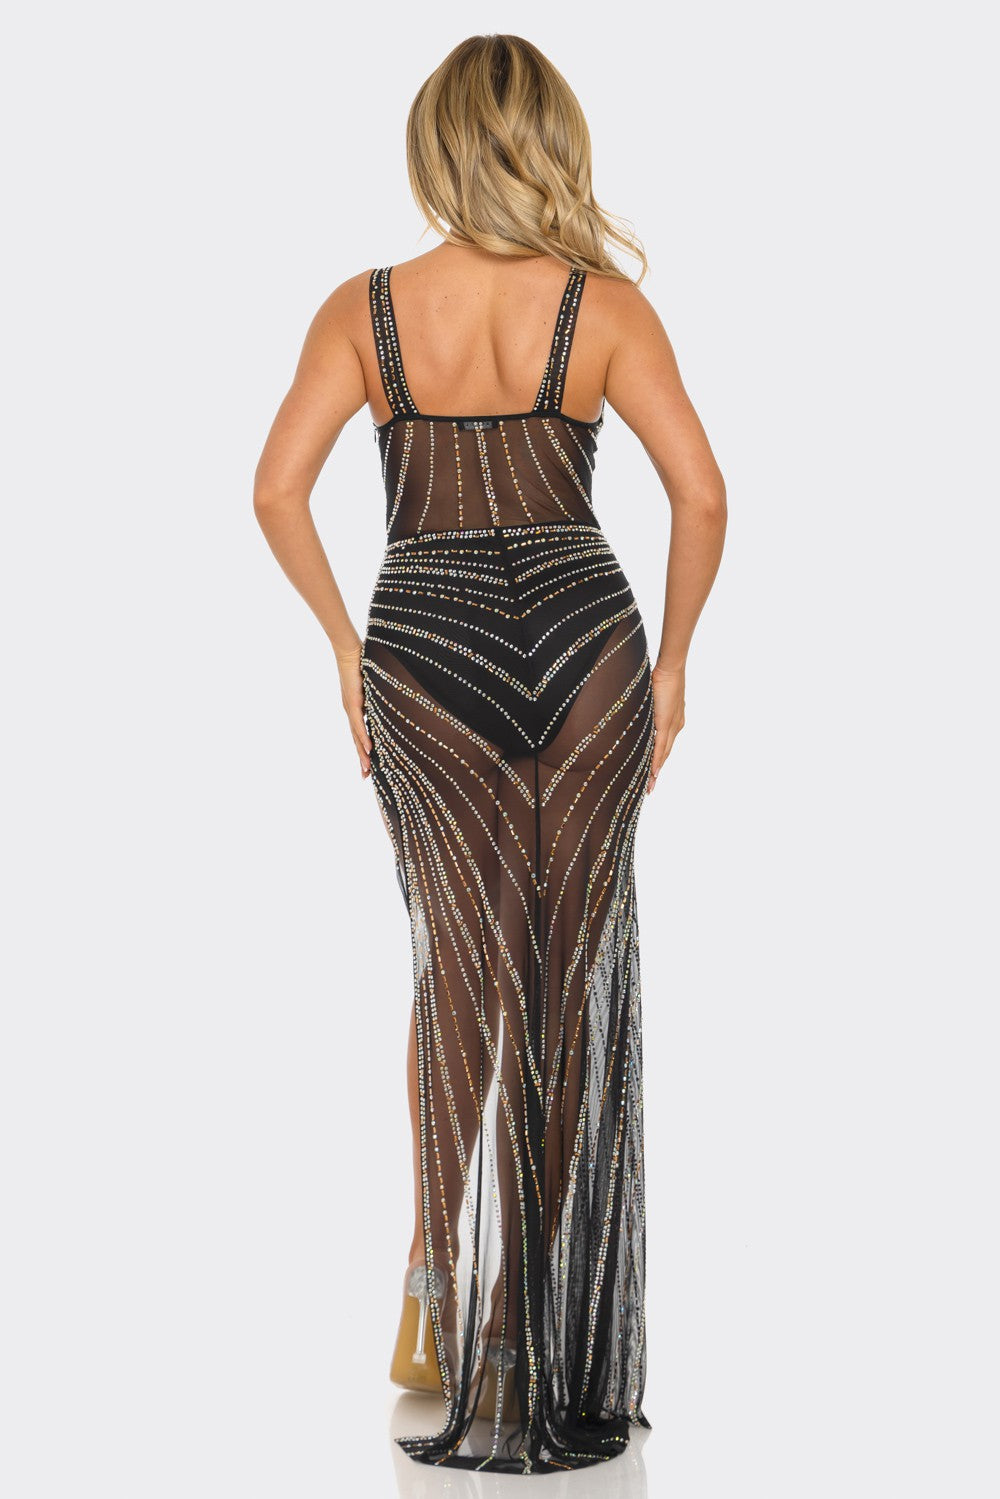 Jewel-toned Rhinestone Overlap Maxi Dress Black